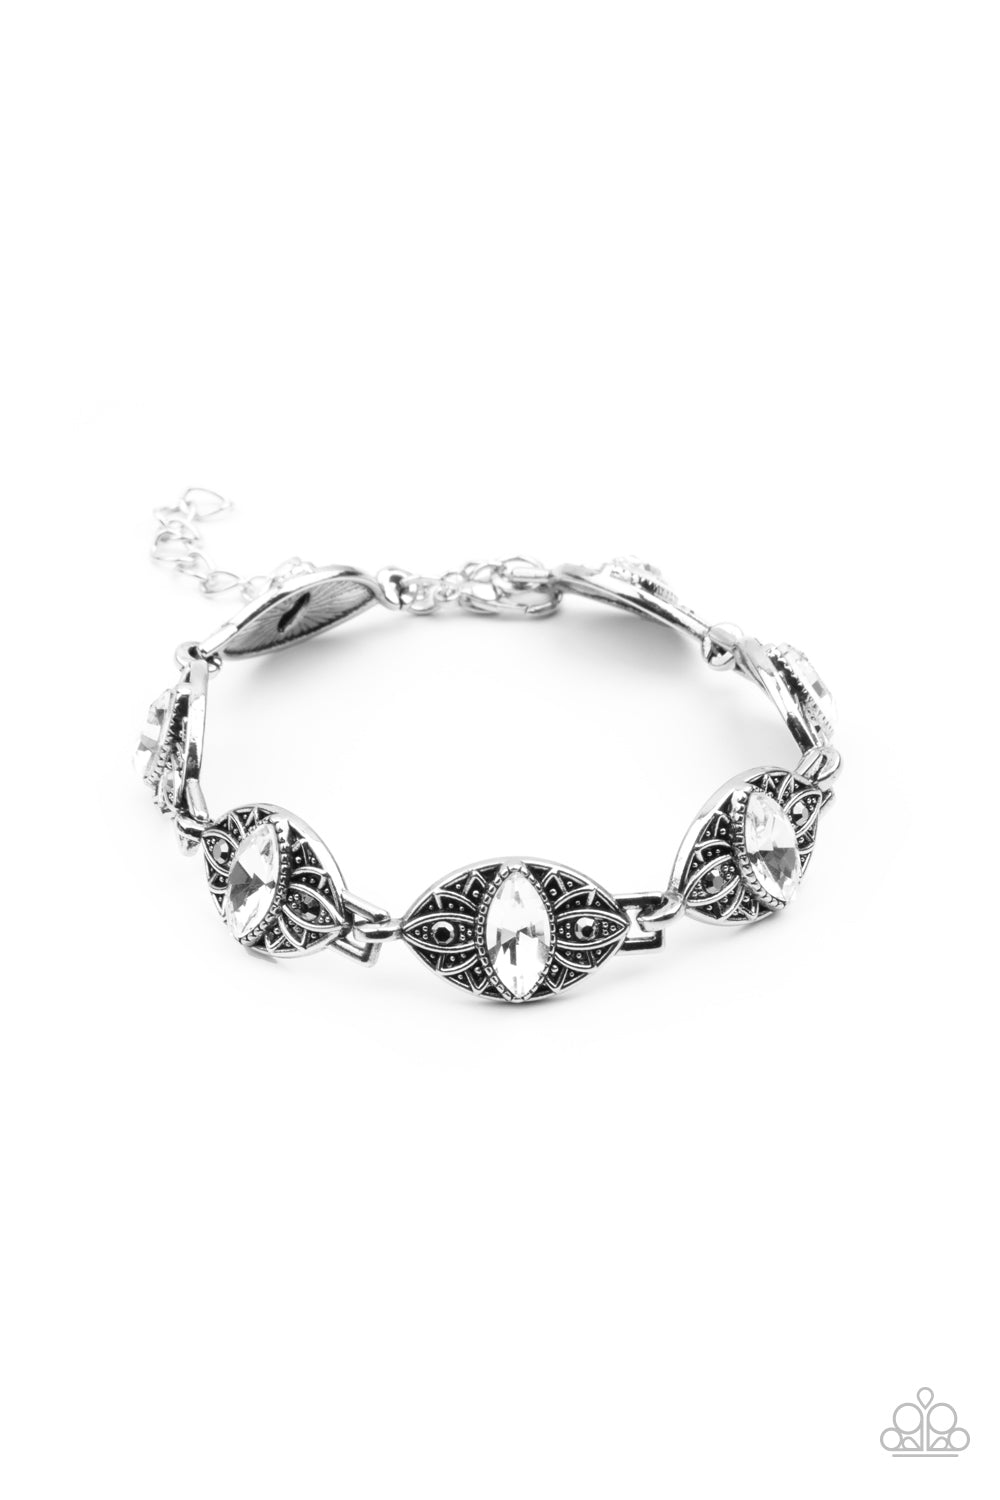 Crown Privilege - White Bracelet - Princess Glam Shop